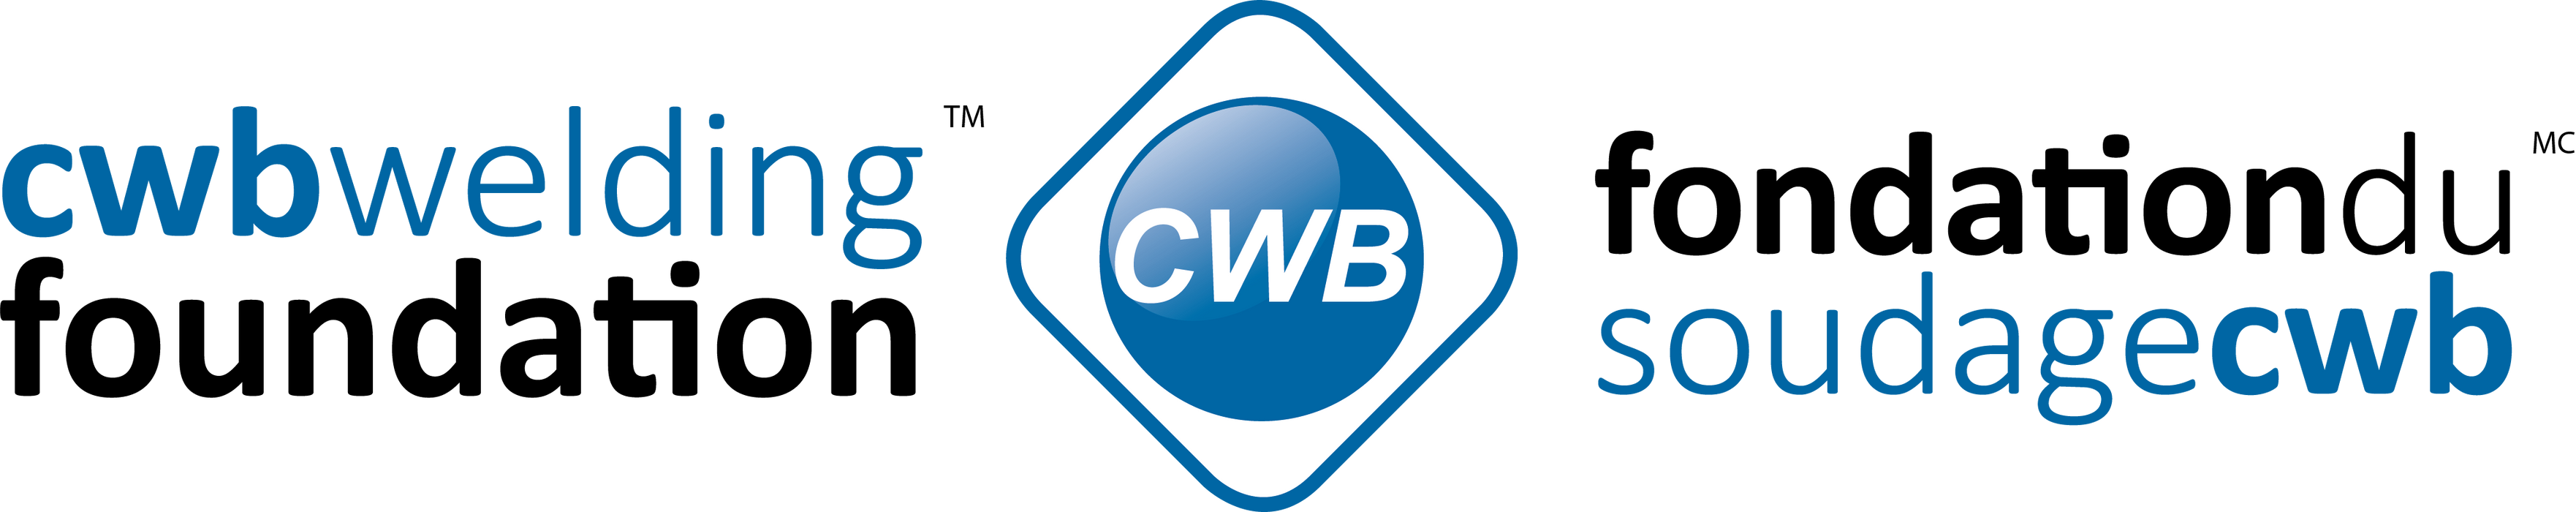 CWB Logo Stitching on Jackets